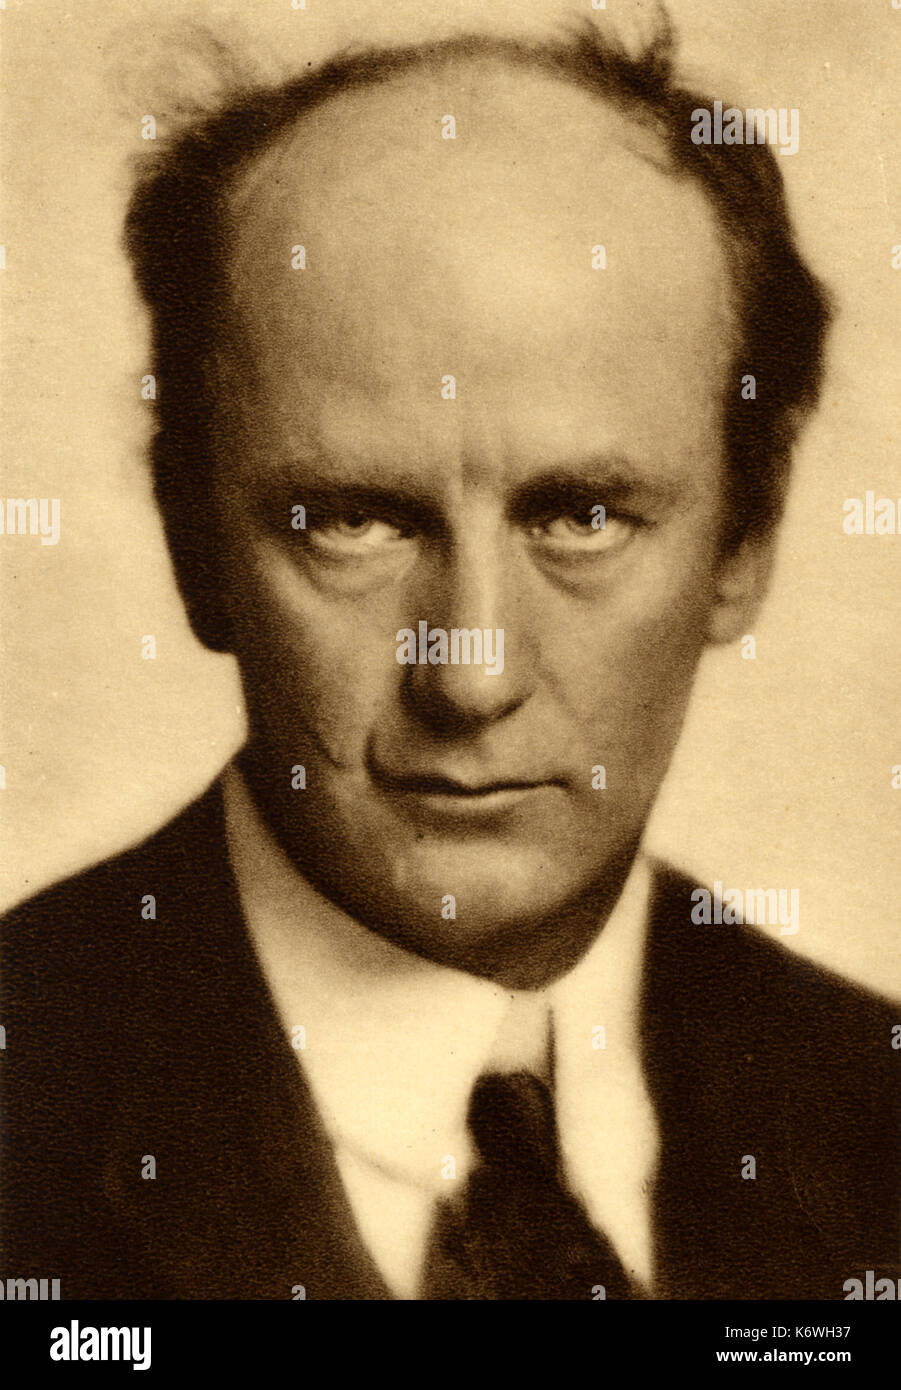 Wilhelm Furtwängler - portrait of the German conductor and composer. 1886-1954. Stock Photo